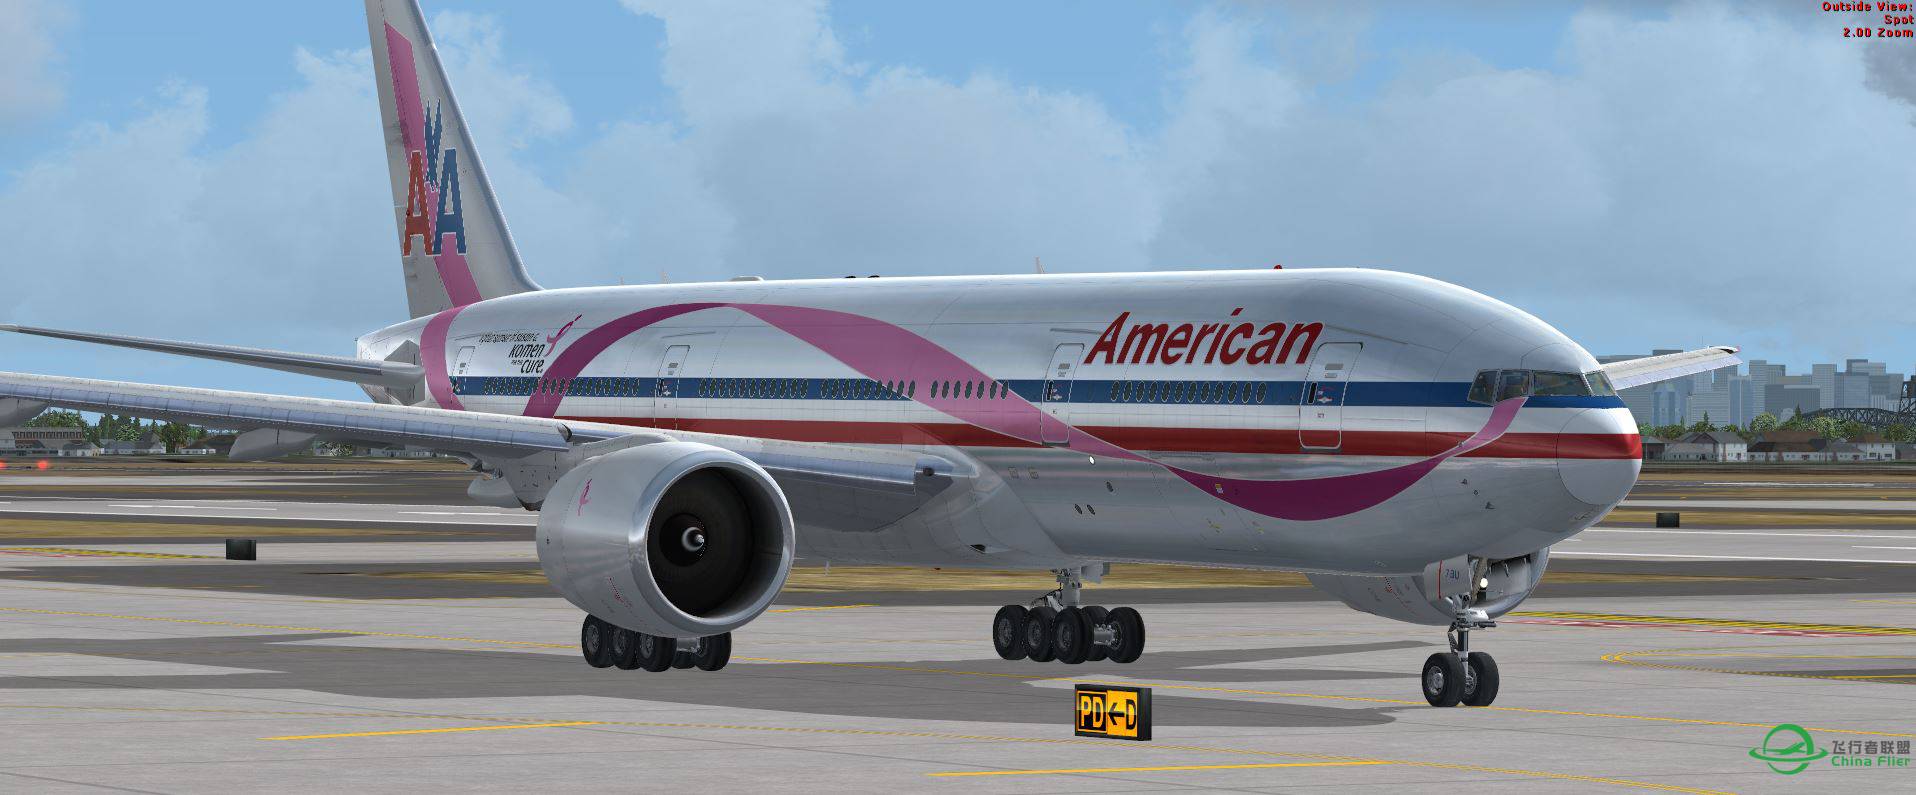 B777 American Airline-6166 